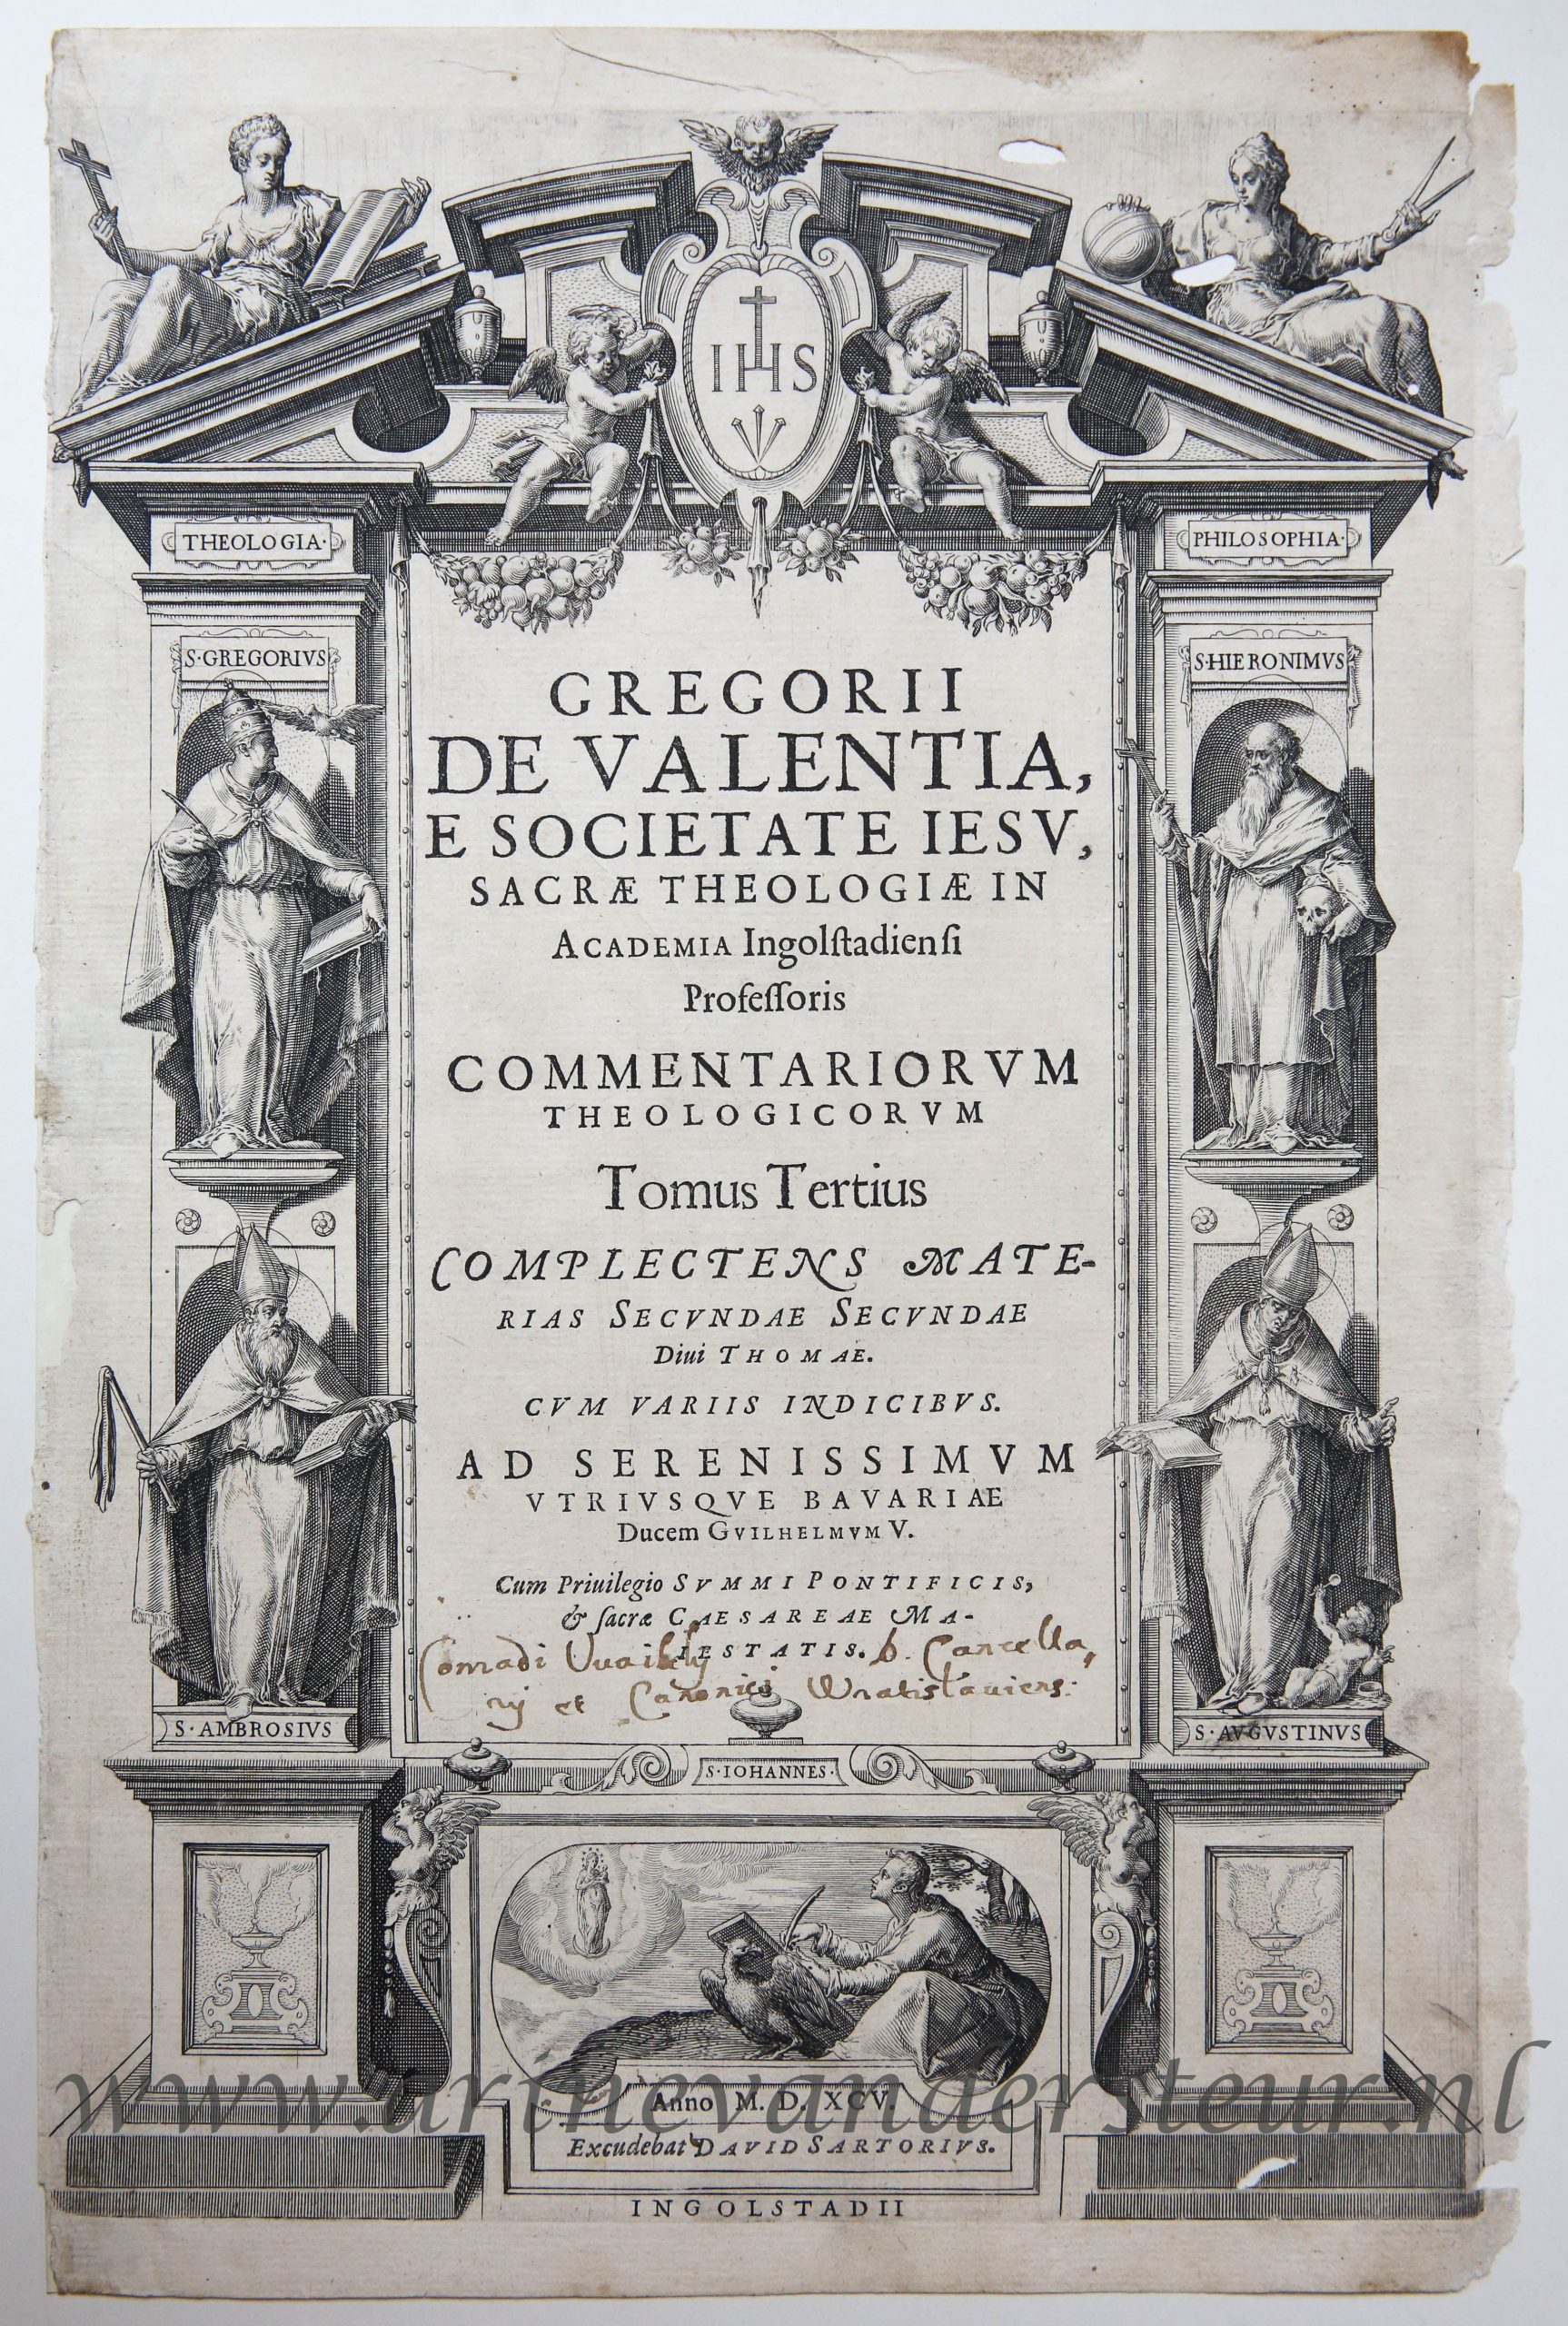 [Antique title page, 1595] Gregorii De Valentia, Metimnensis E Societate Jesu, published 1595, 1 p.